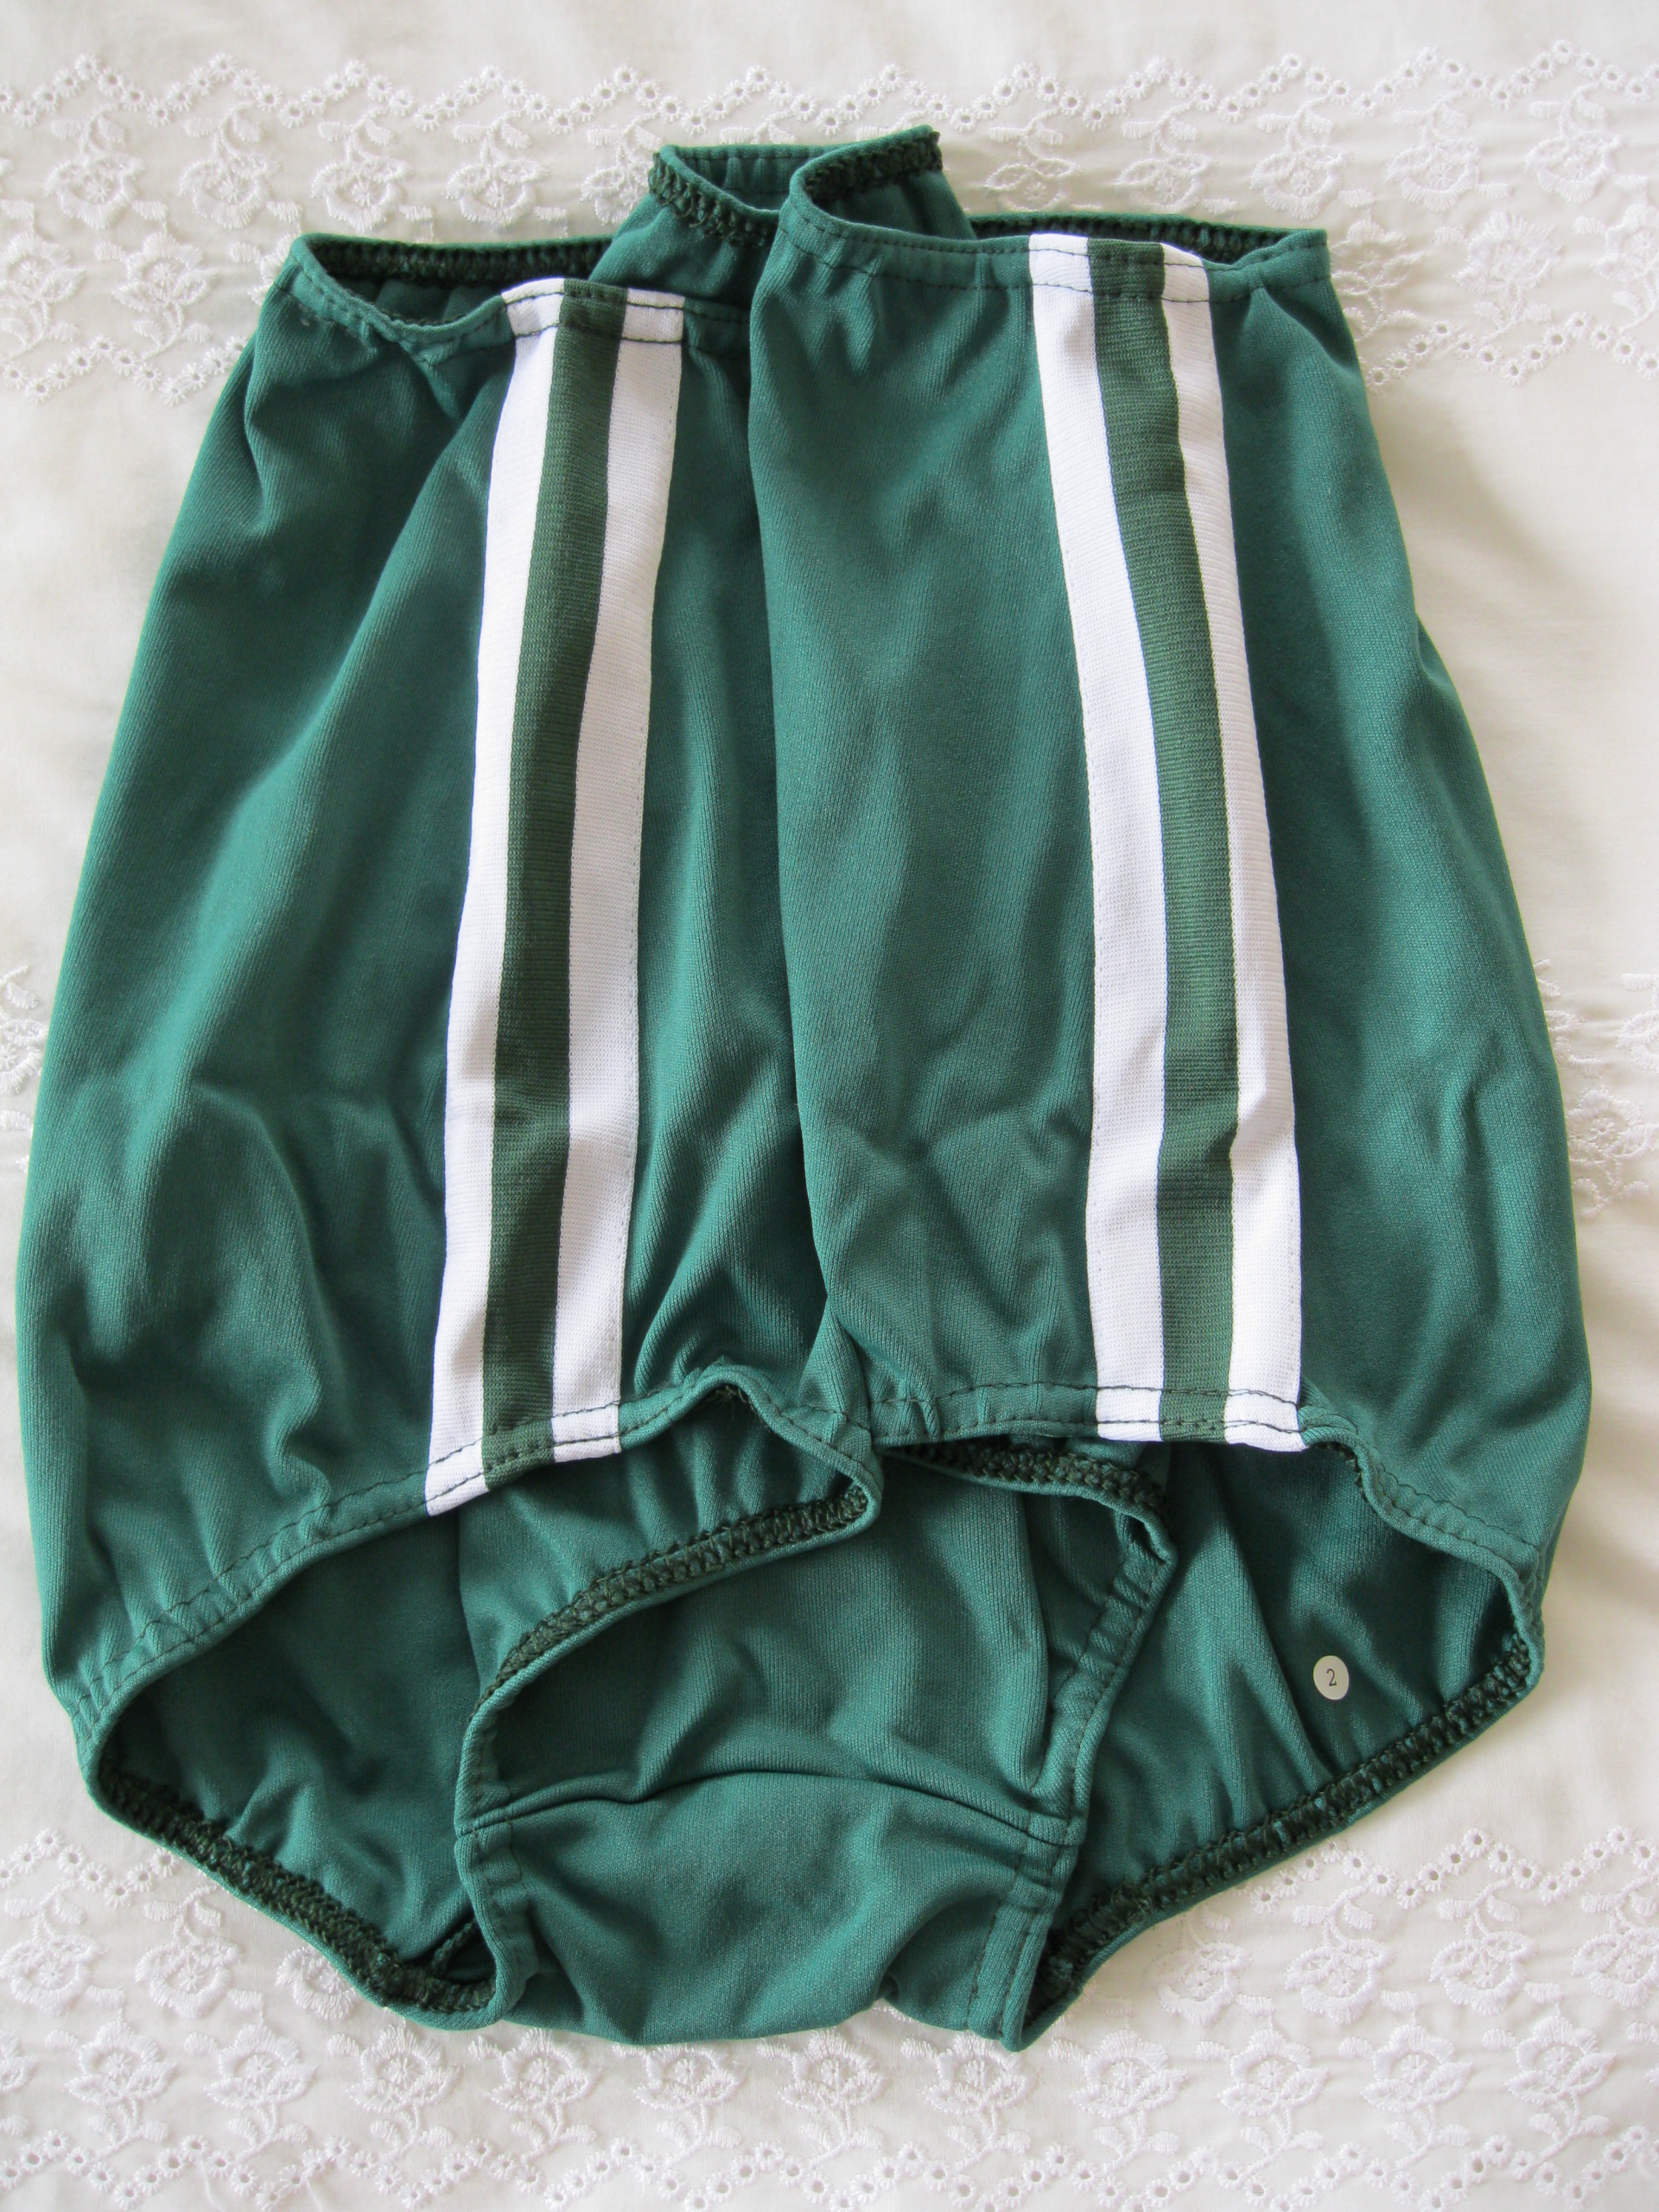 Girls Classic BOTTLE GREEN ( XXL -Size 32) Gym Knickers (Athletics Shorts/ Underwear) BY GYMPHLEX